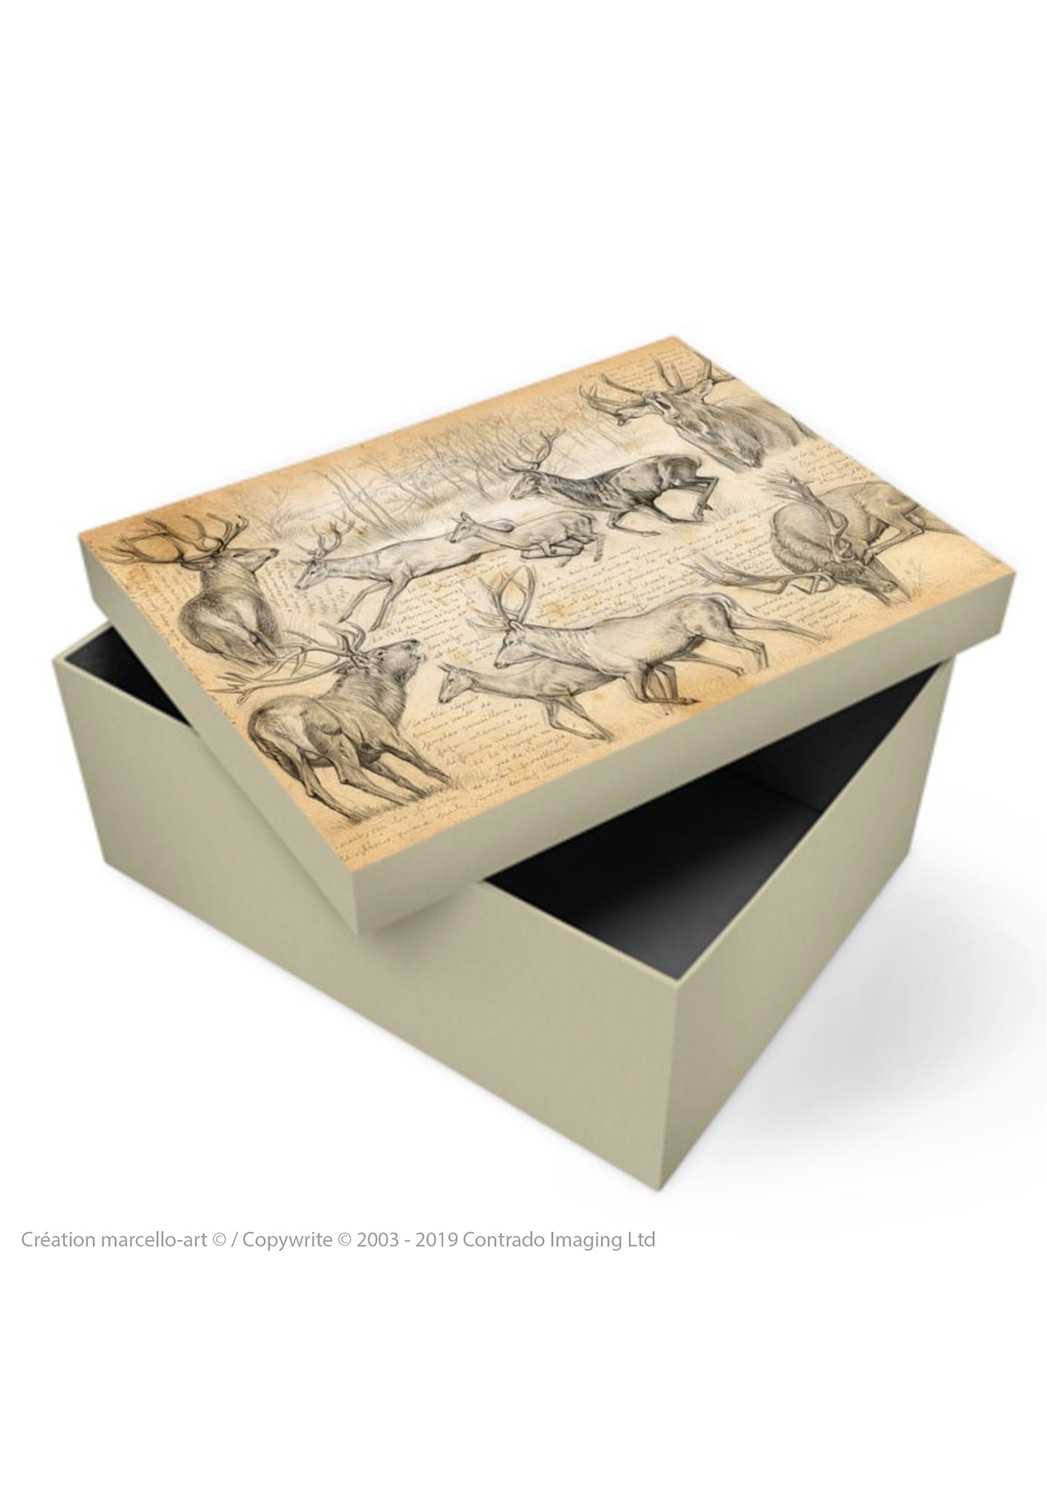 Marcello-art: Decoration accessoiries Souvenir box 271 red deer